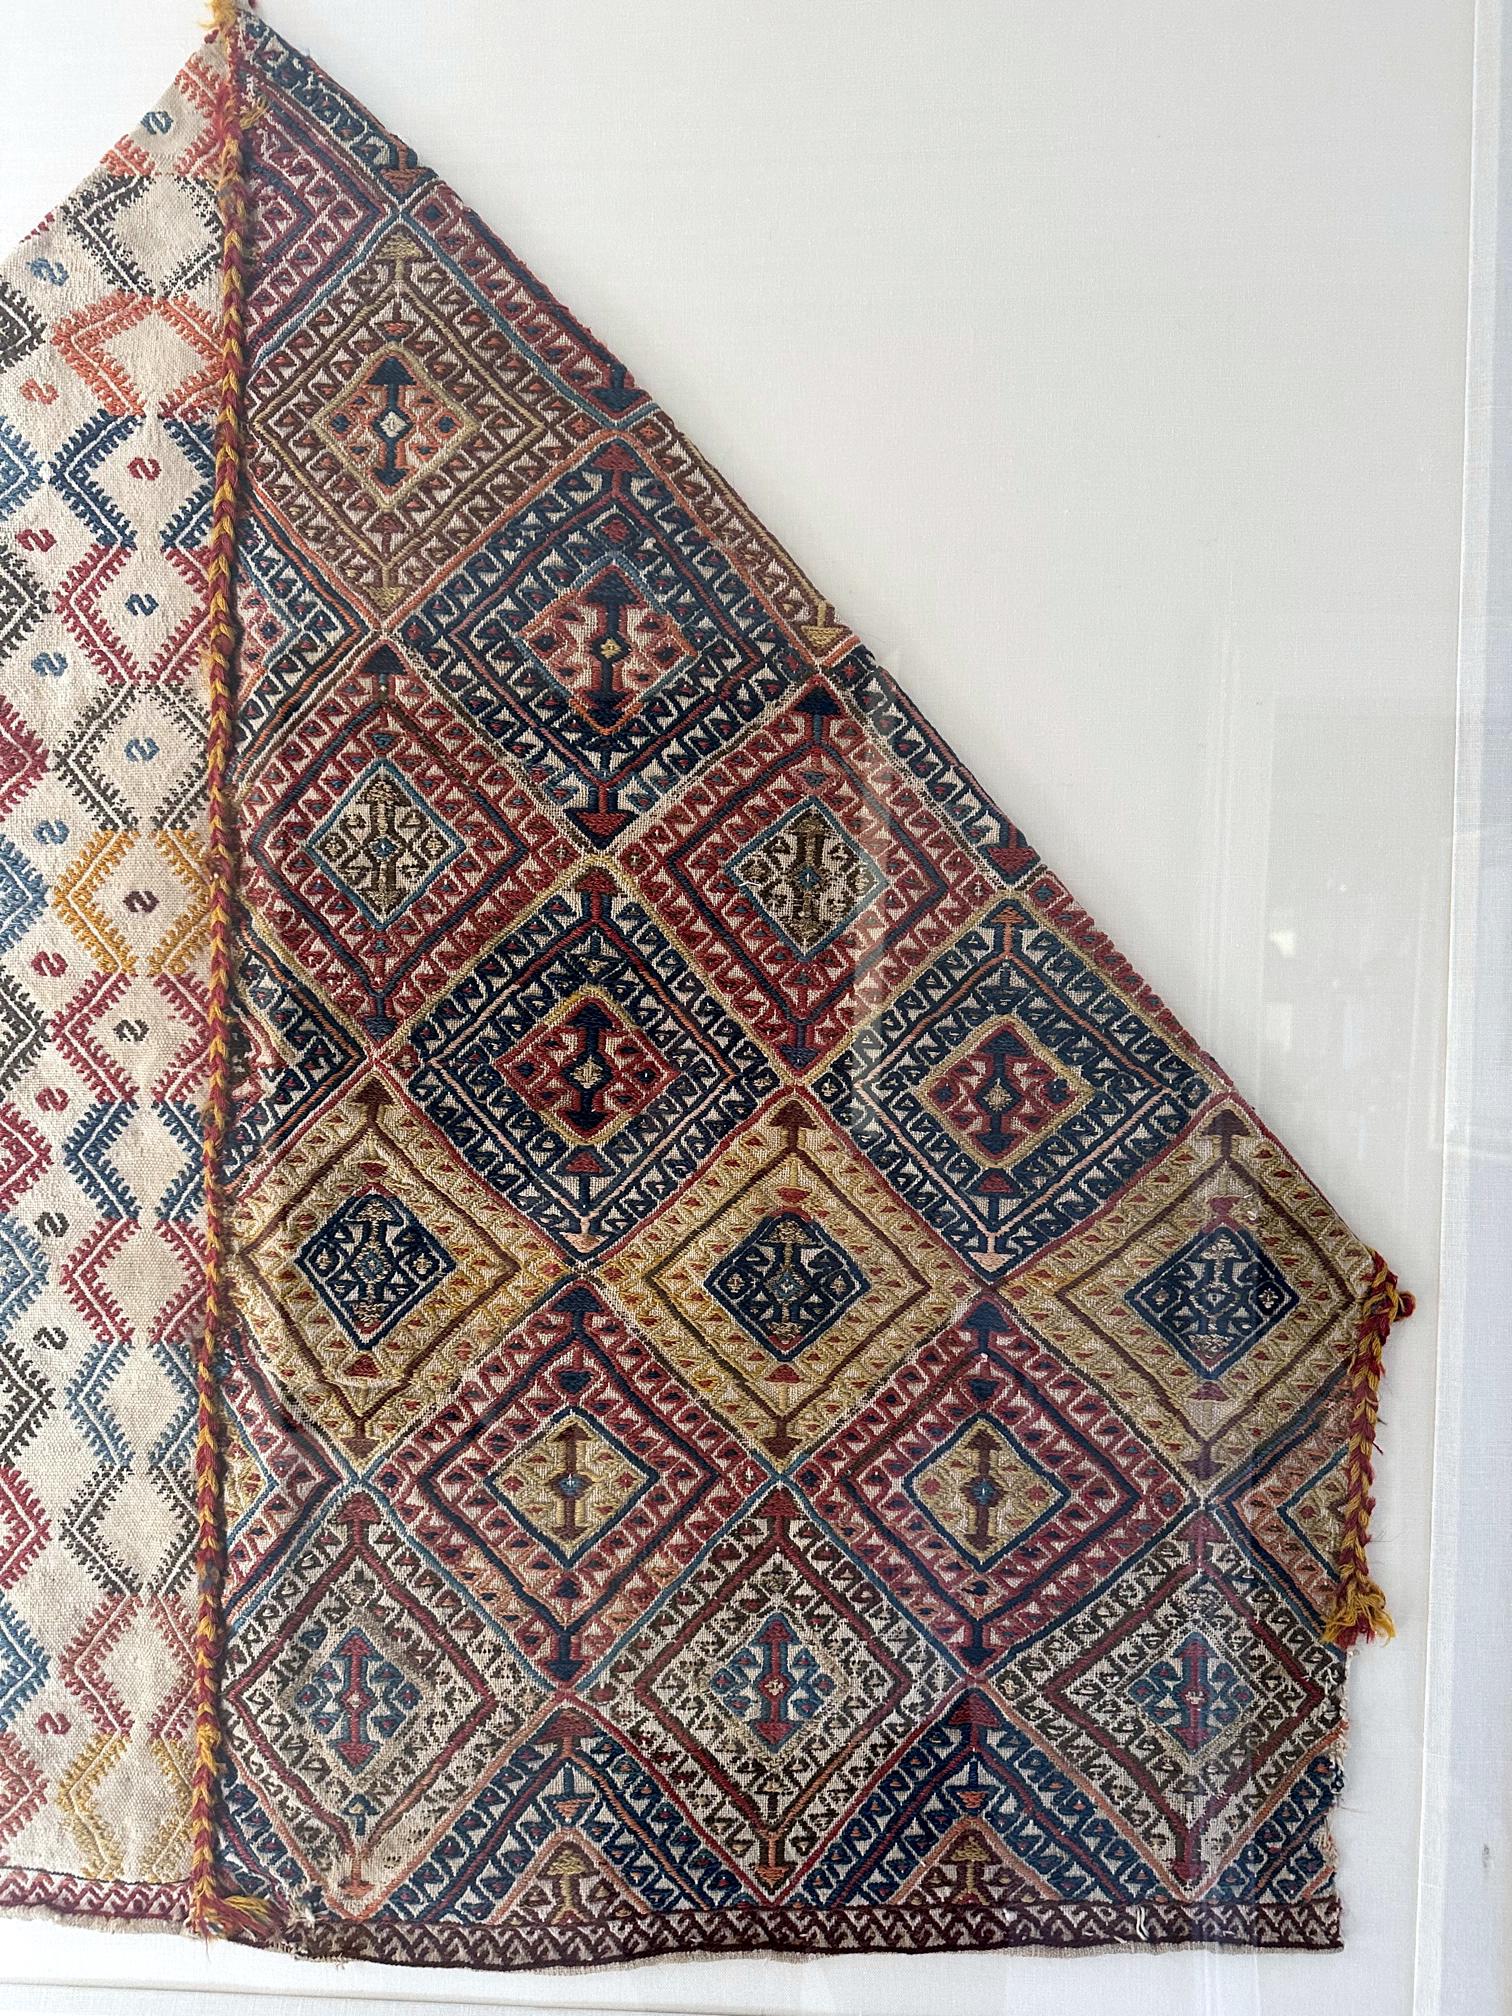 Framed Antique Woven Anatolian Woven Textile In Good Condition For Sale In Atlanta, GA